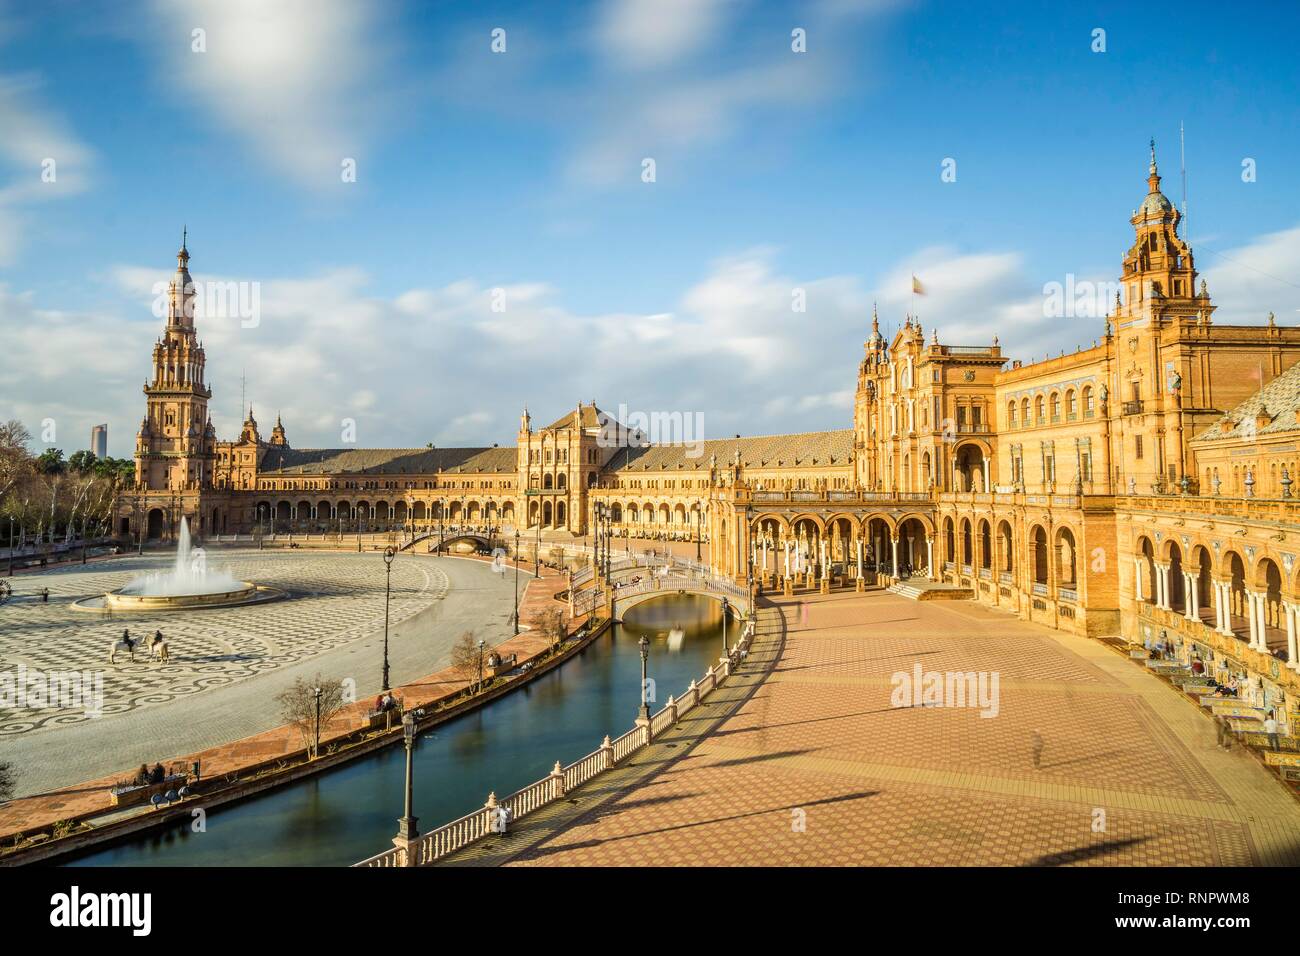 Spain Square or Plaza de Espana, Seville, Andalusia, Spain Stock Photo